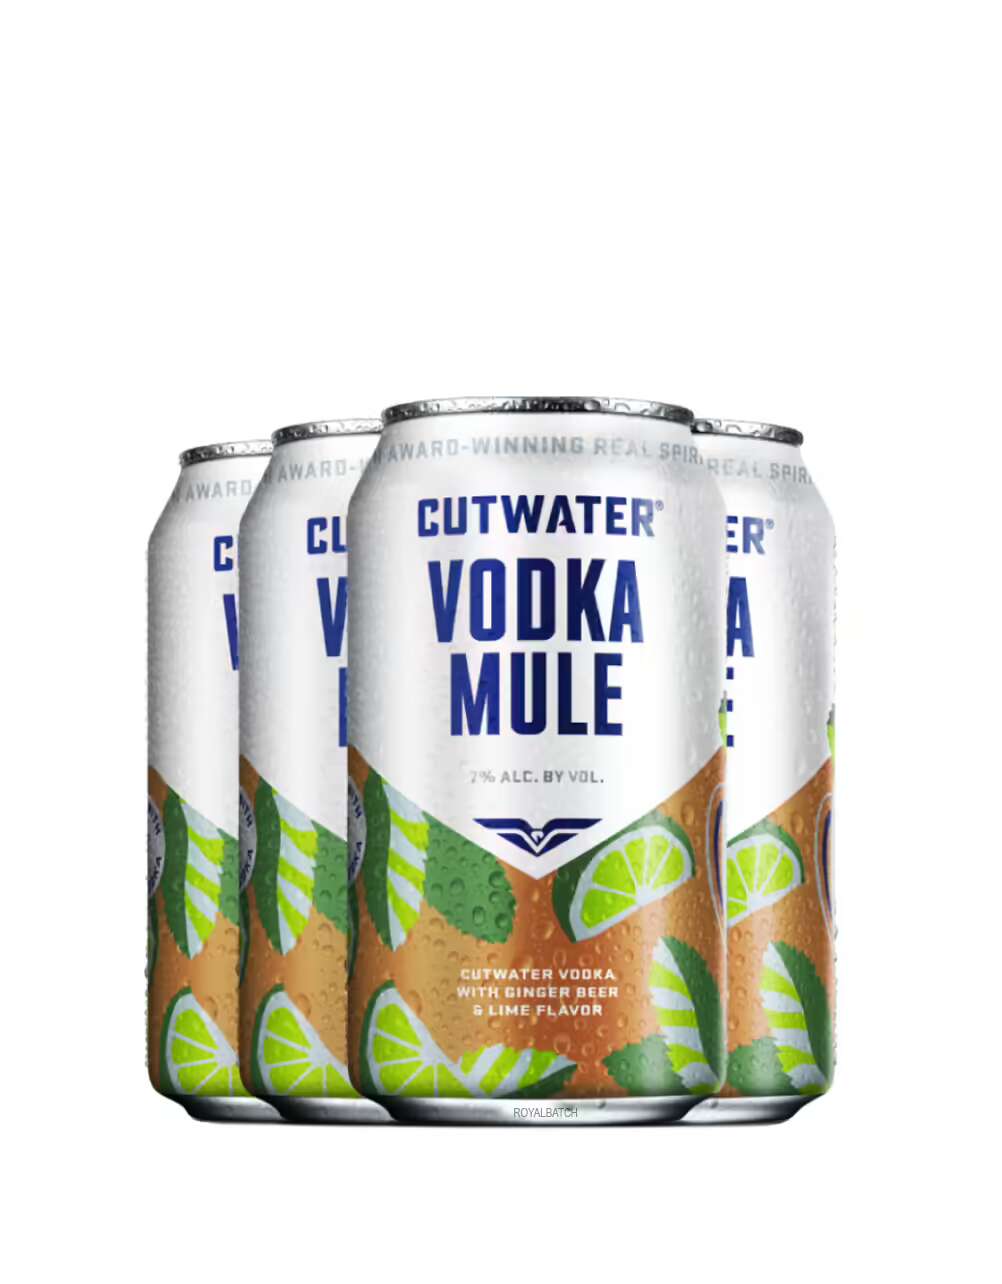 Cutwater Fugu Vodka Mule Canned Cocktails (4 Pack) 355ml